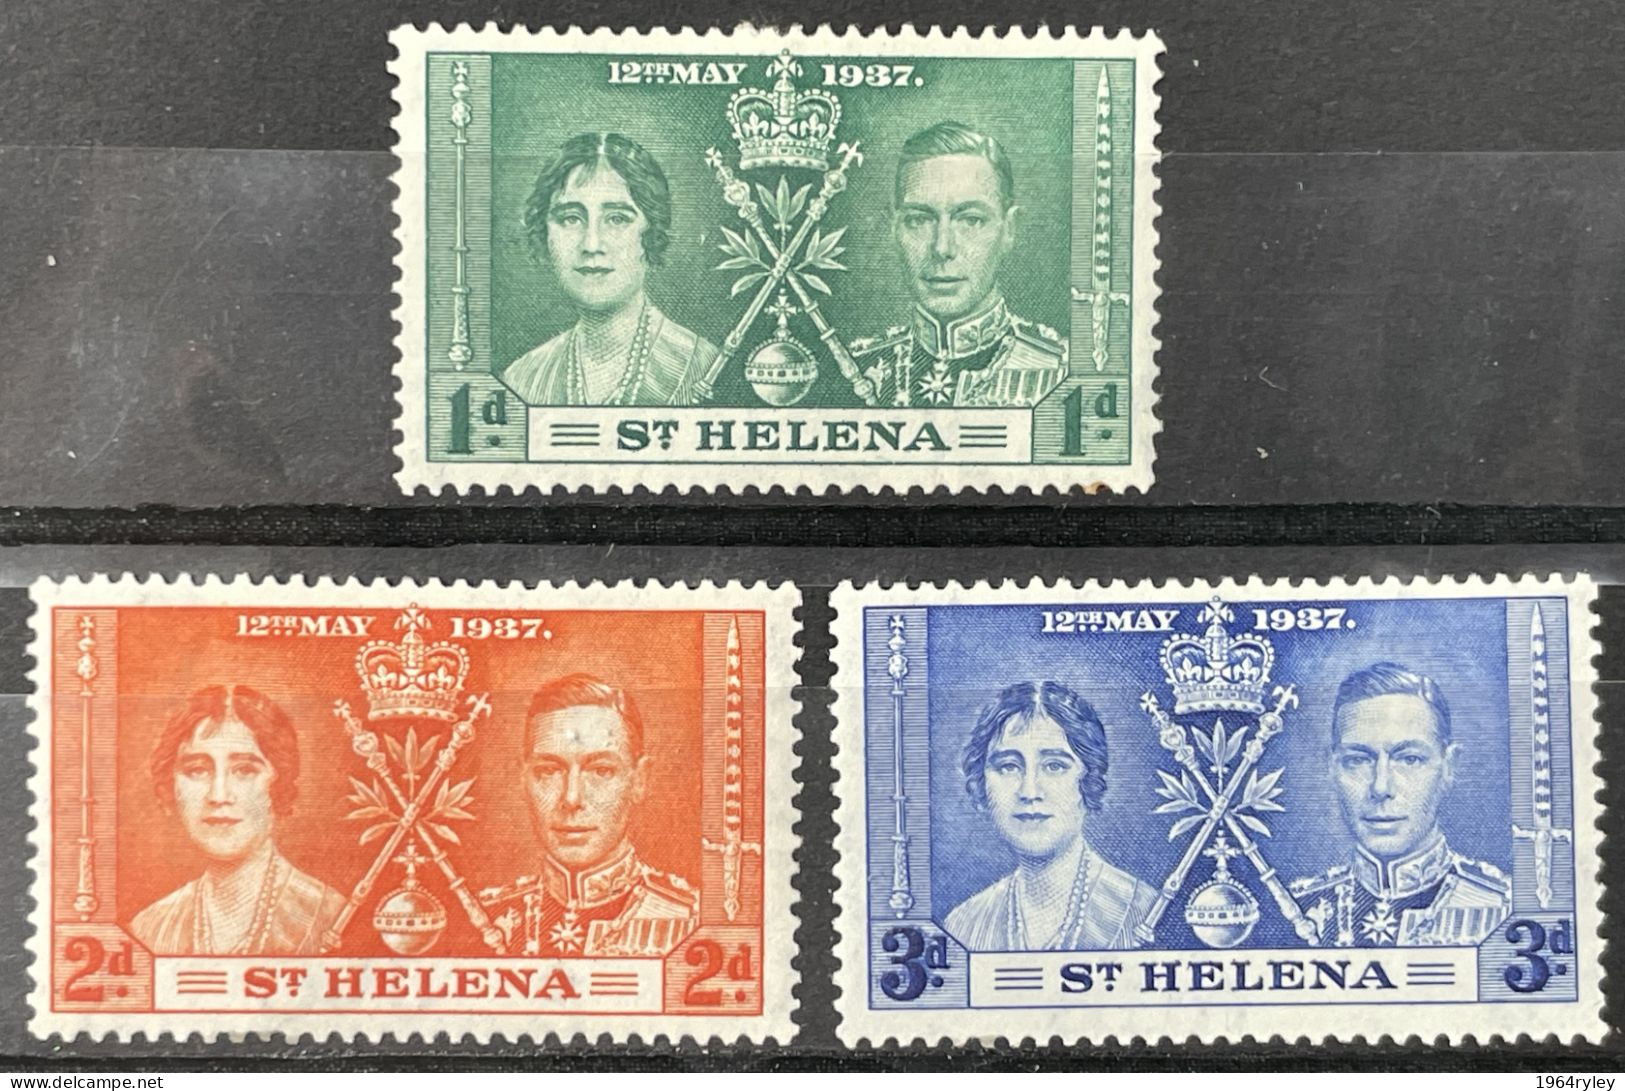 ST. HELENA  - MH*  - 1937 CORONATION ISSUE - # 94/96 - Saint Helena Island